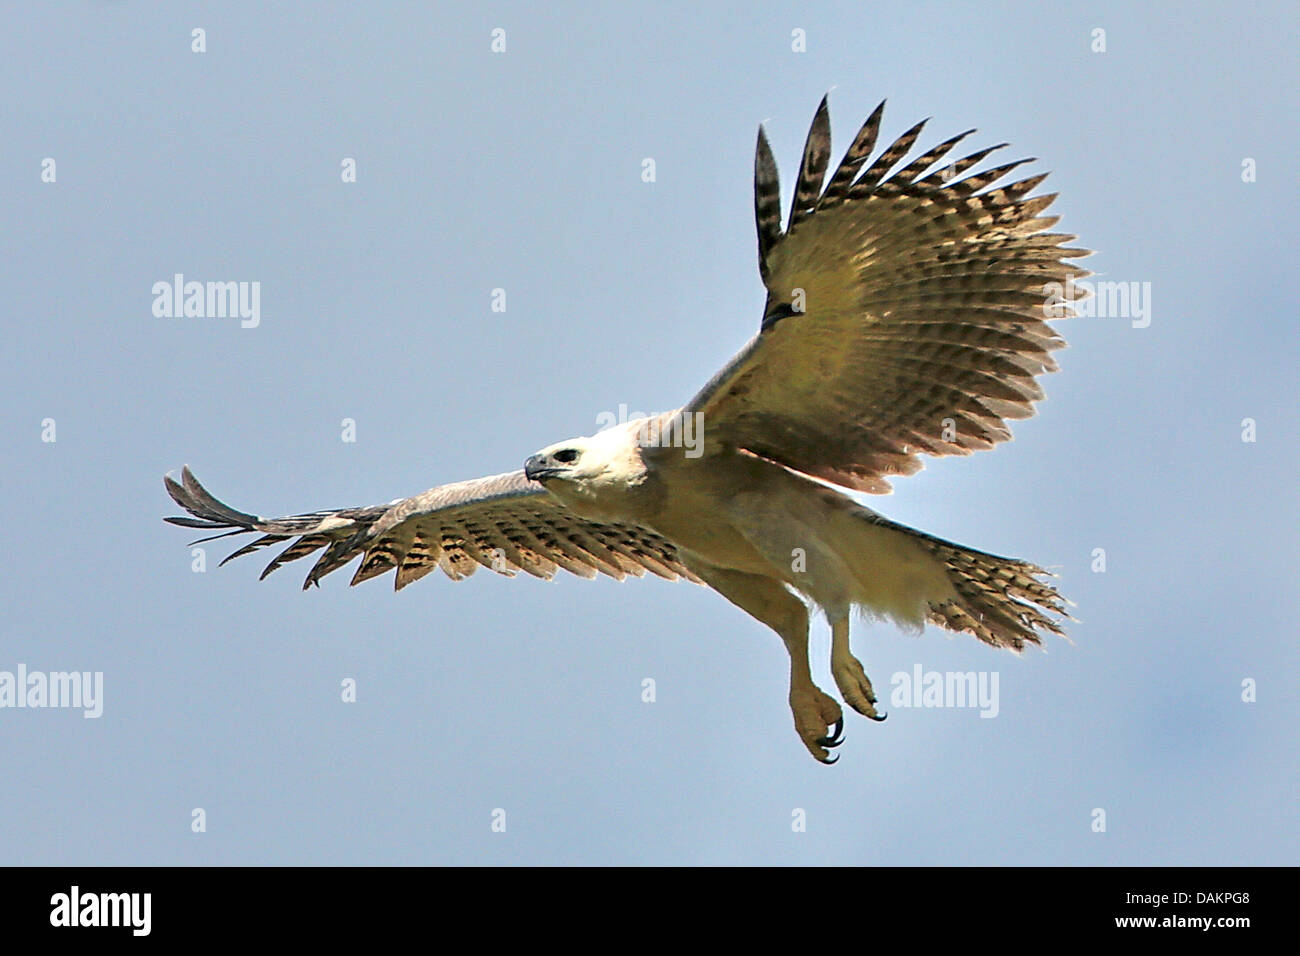 https://c8.alamy.com/comp/DAKPG8/harpy-eagle-harpia-harpyja-immature-on-the-fly-largest-eagle-of-the-DAKPG8.jpg